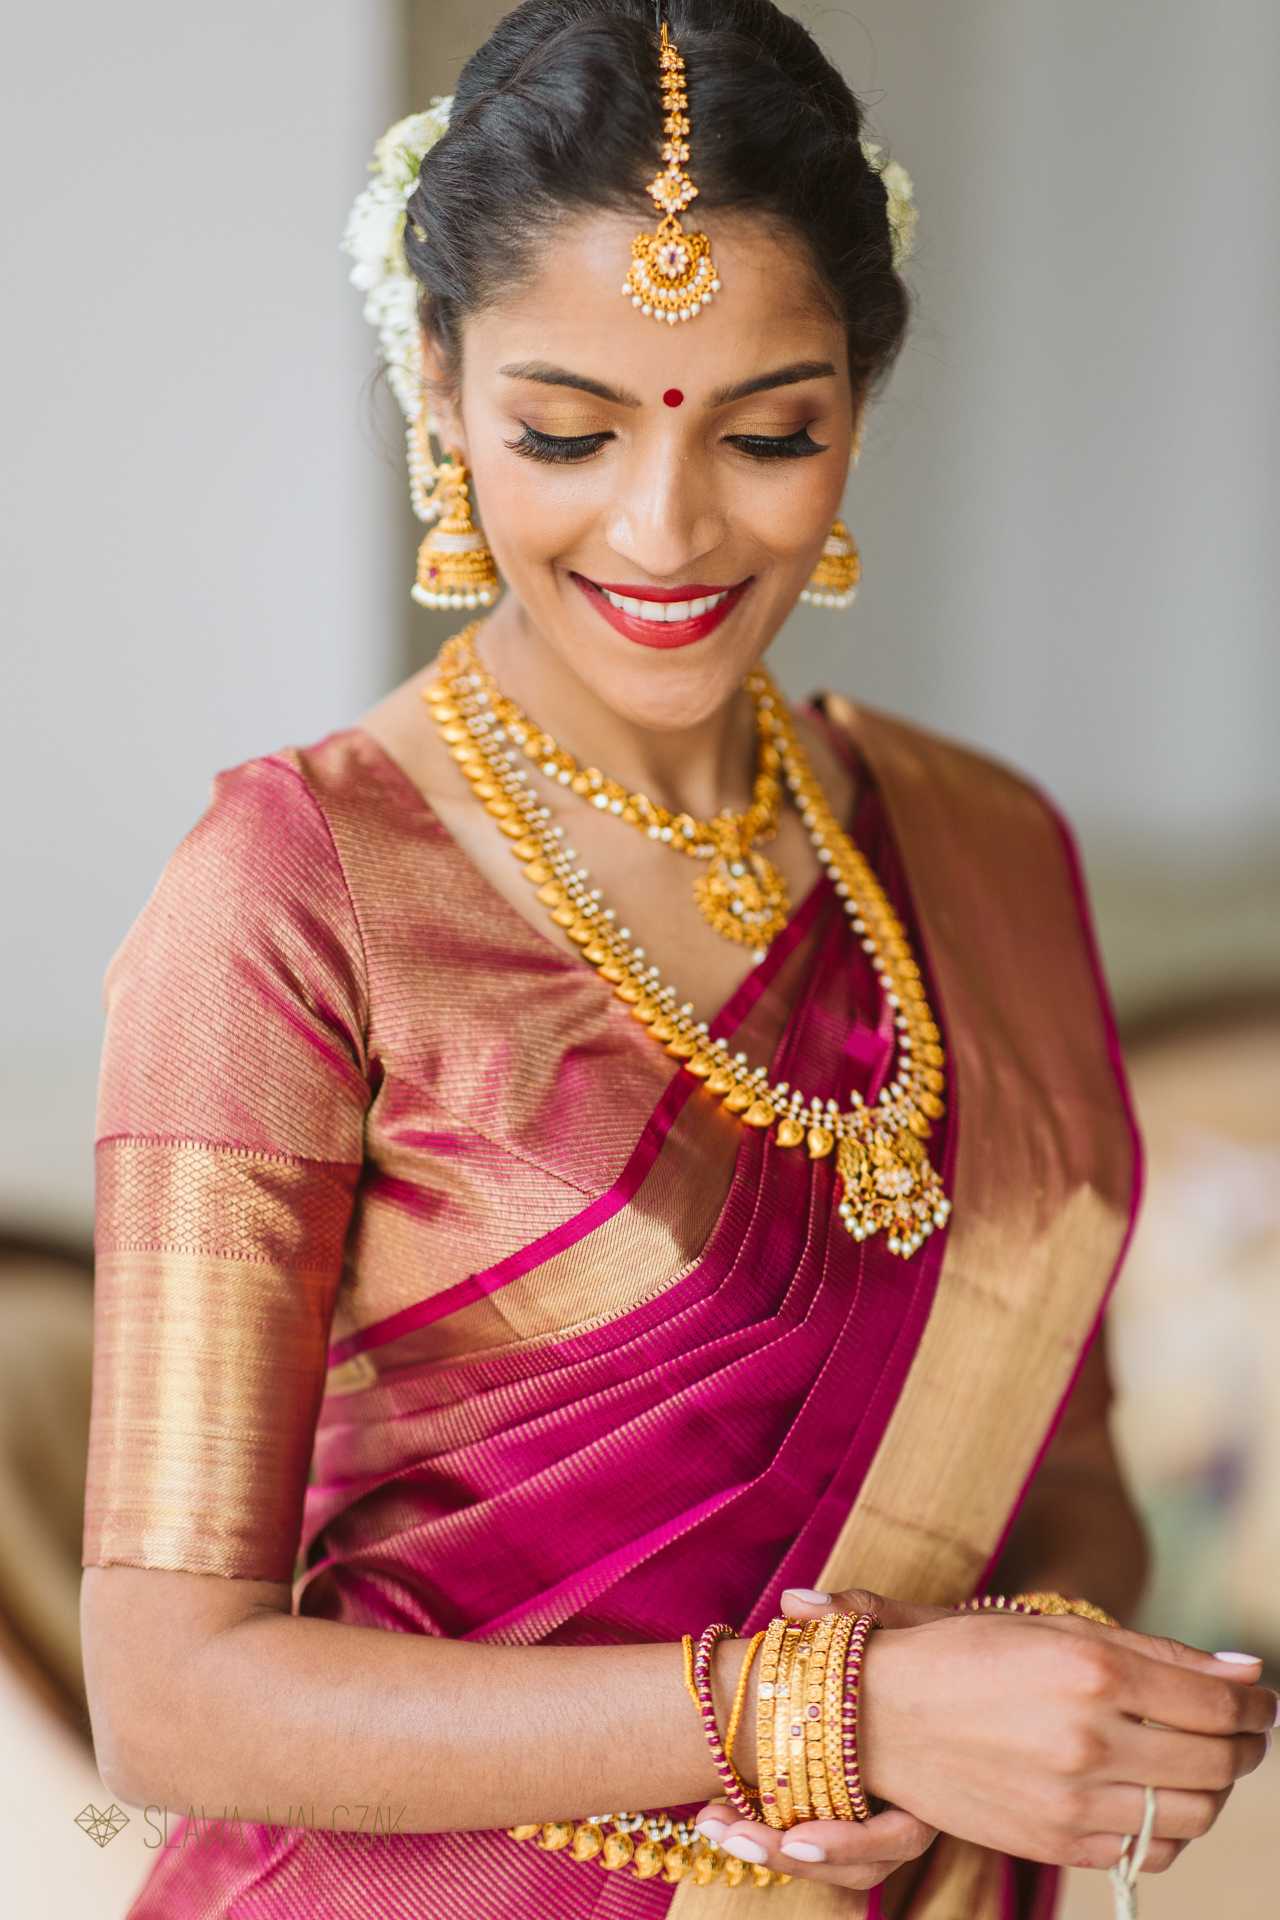 Tamil Hindu Bride portraits at Ditton Manor Wedding